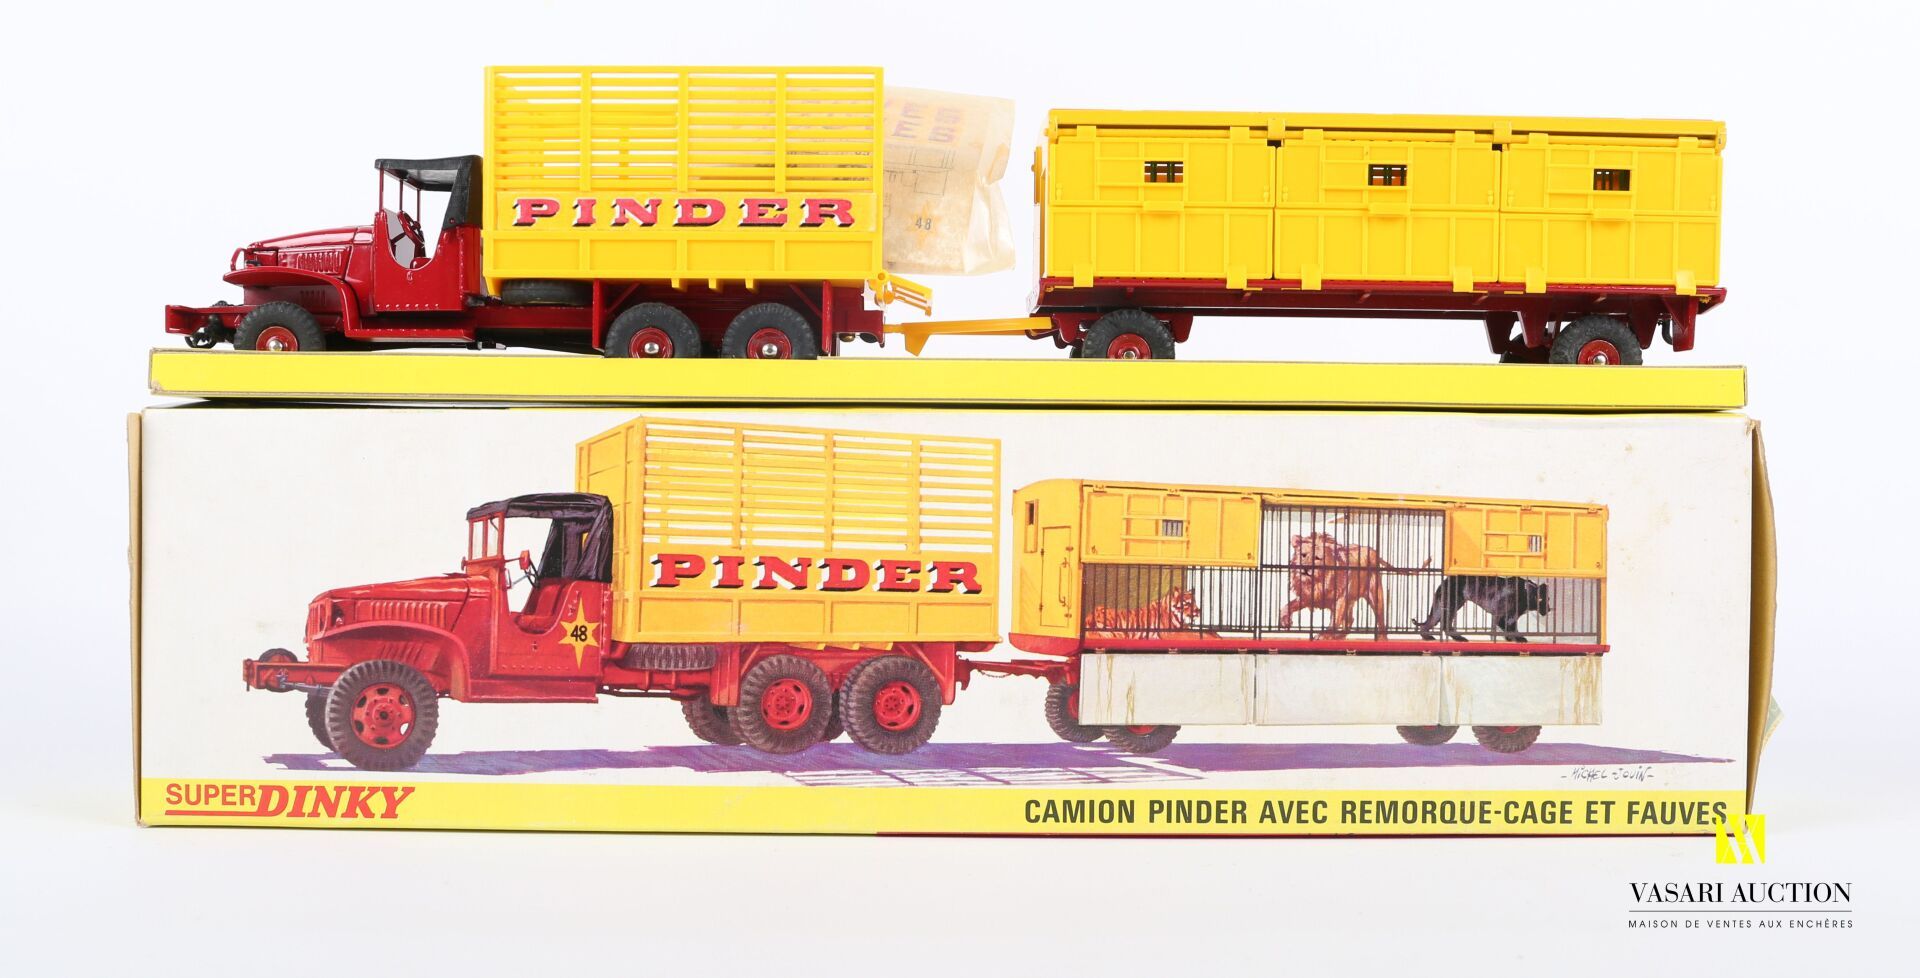 Null SUPER DINKY MECCANO (FR)

Camion G.M.C Pinder avec remorque-cage et fauves &hellip;